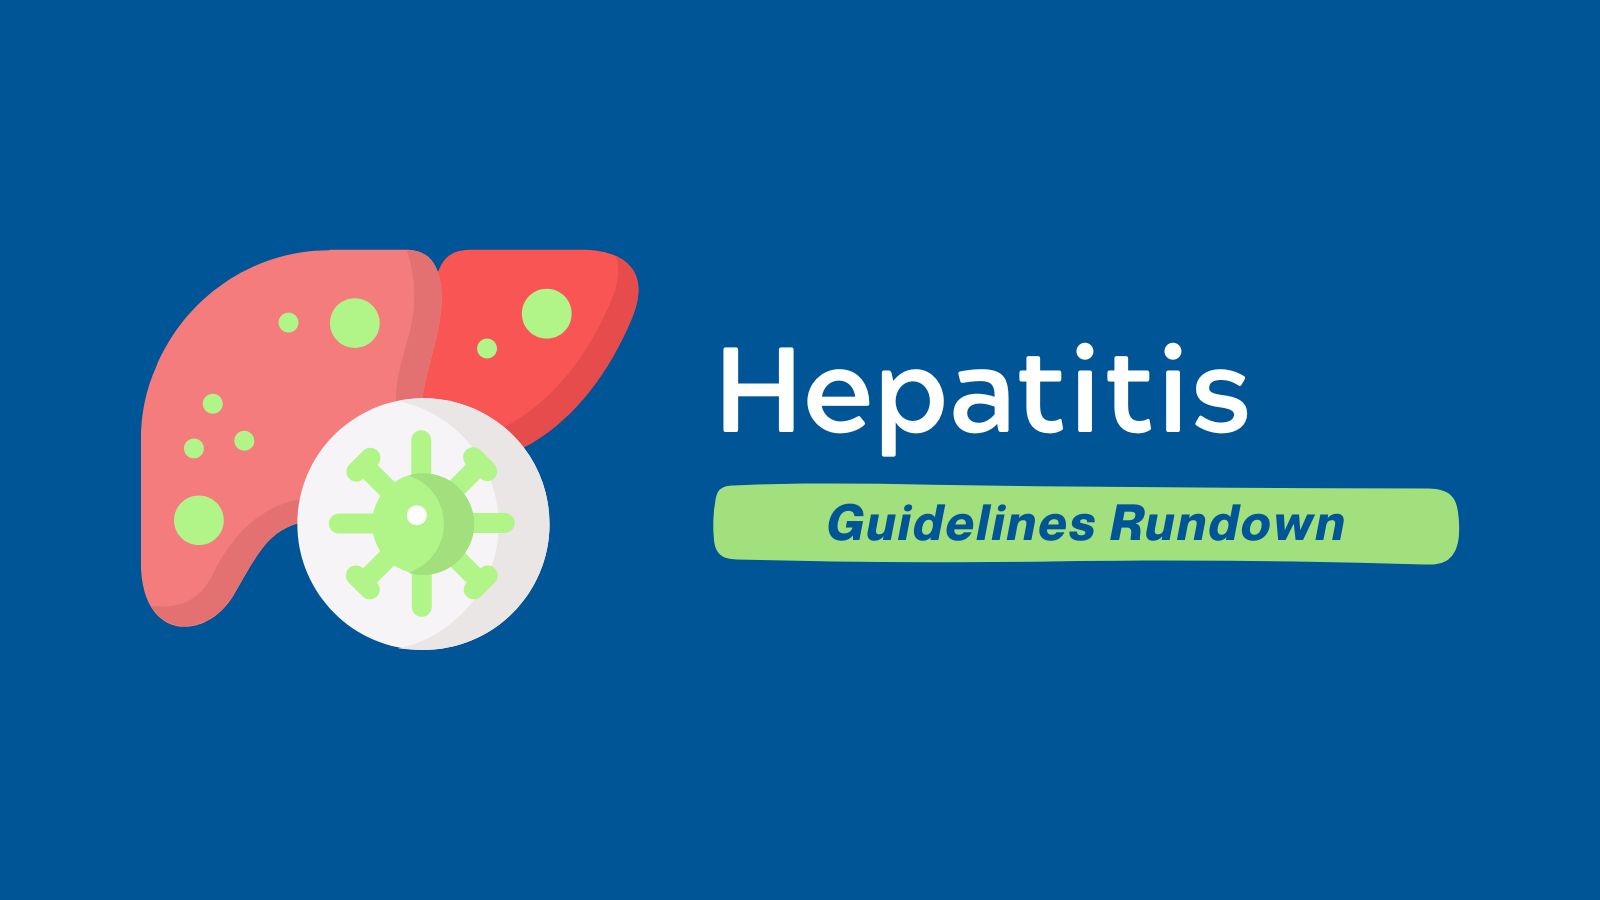 Guidelines Rundown Hepatitis